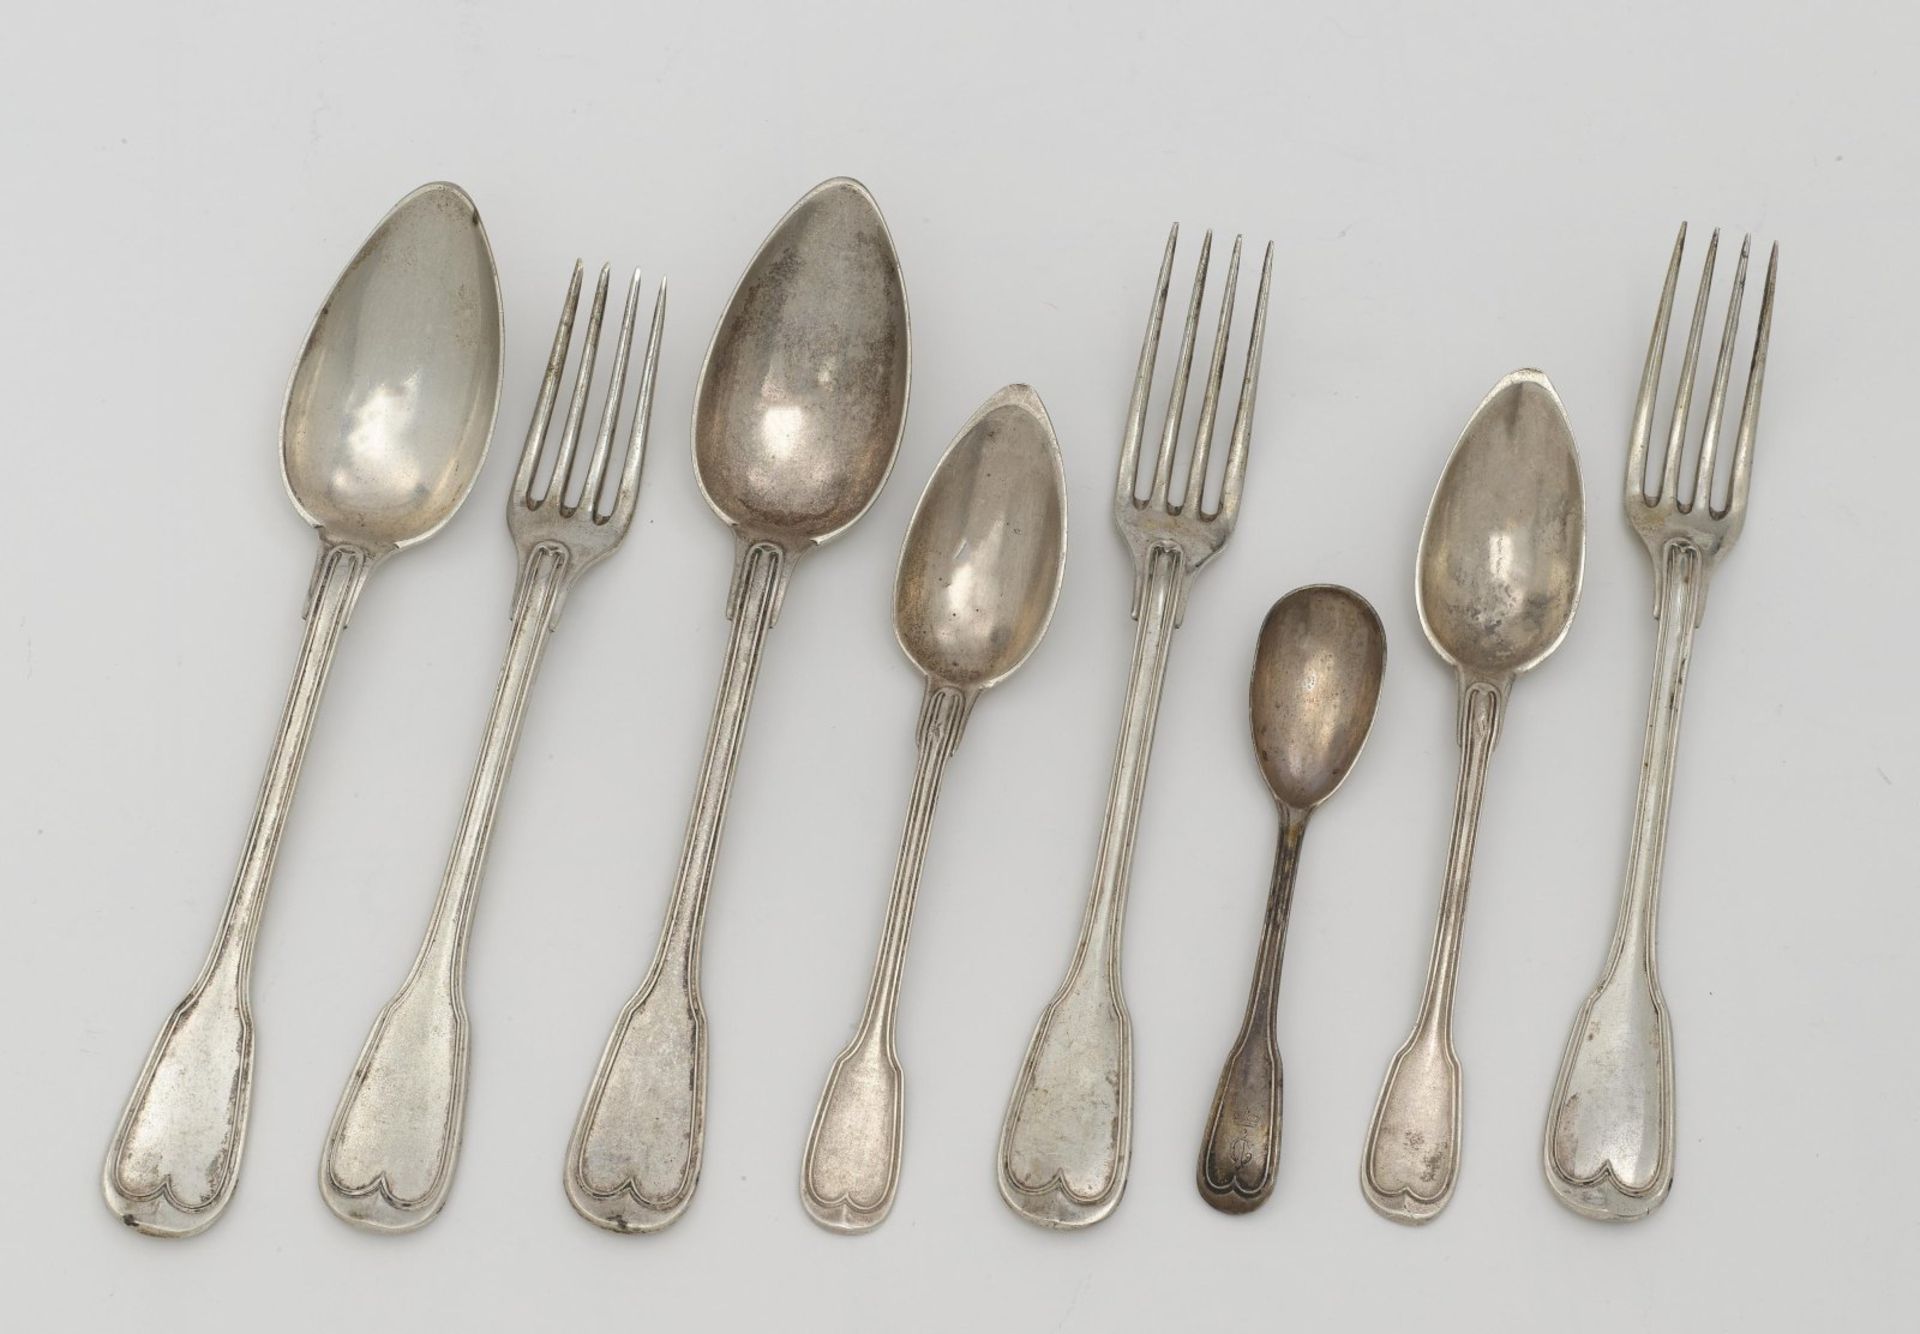 15 cutlery items